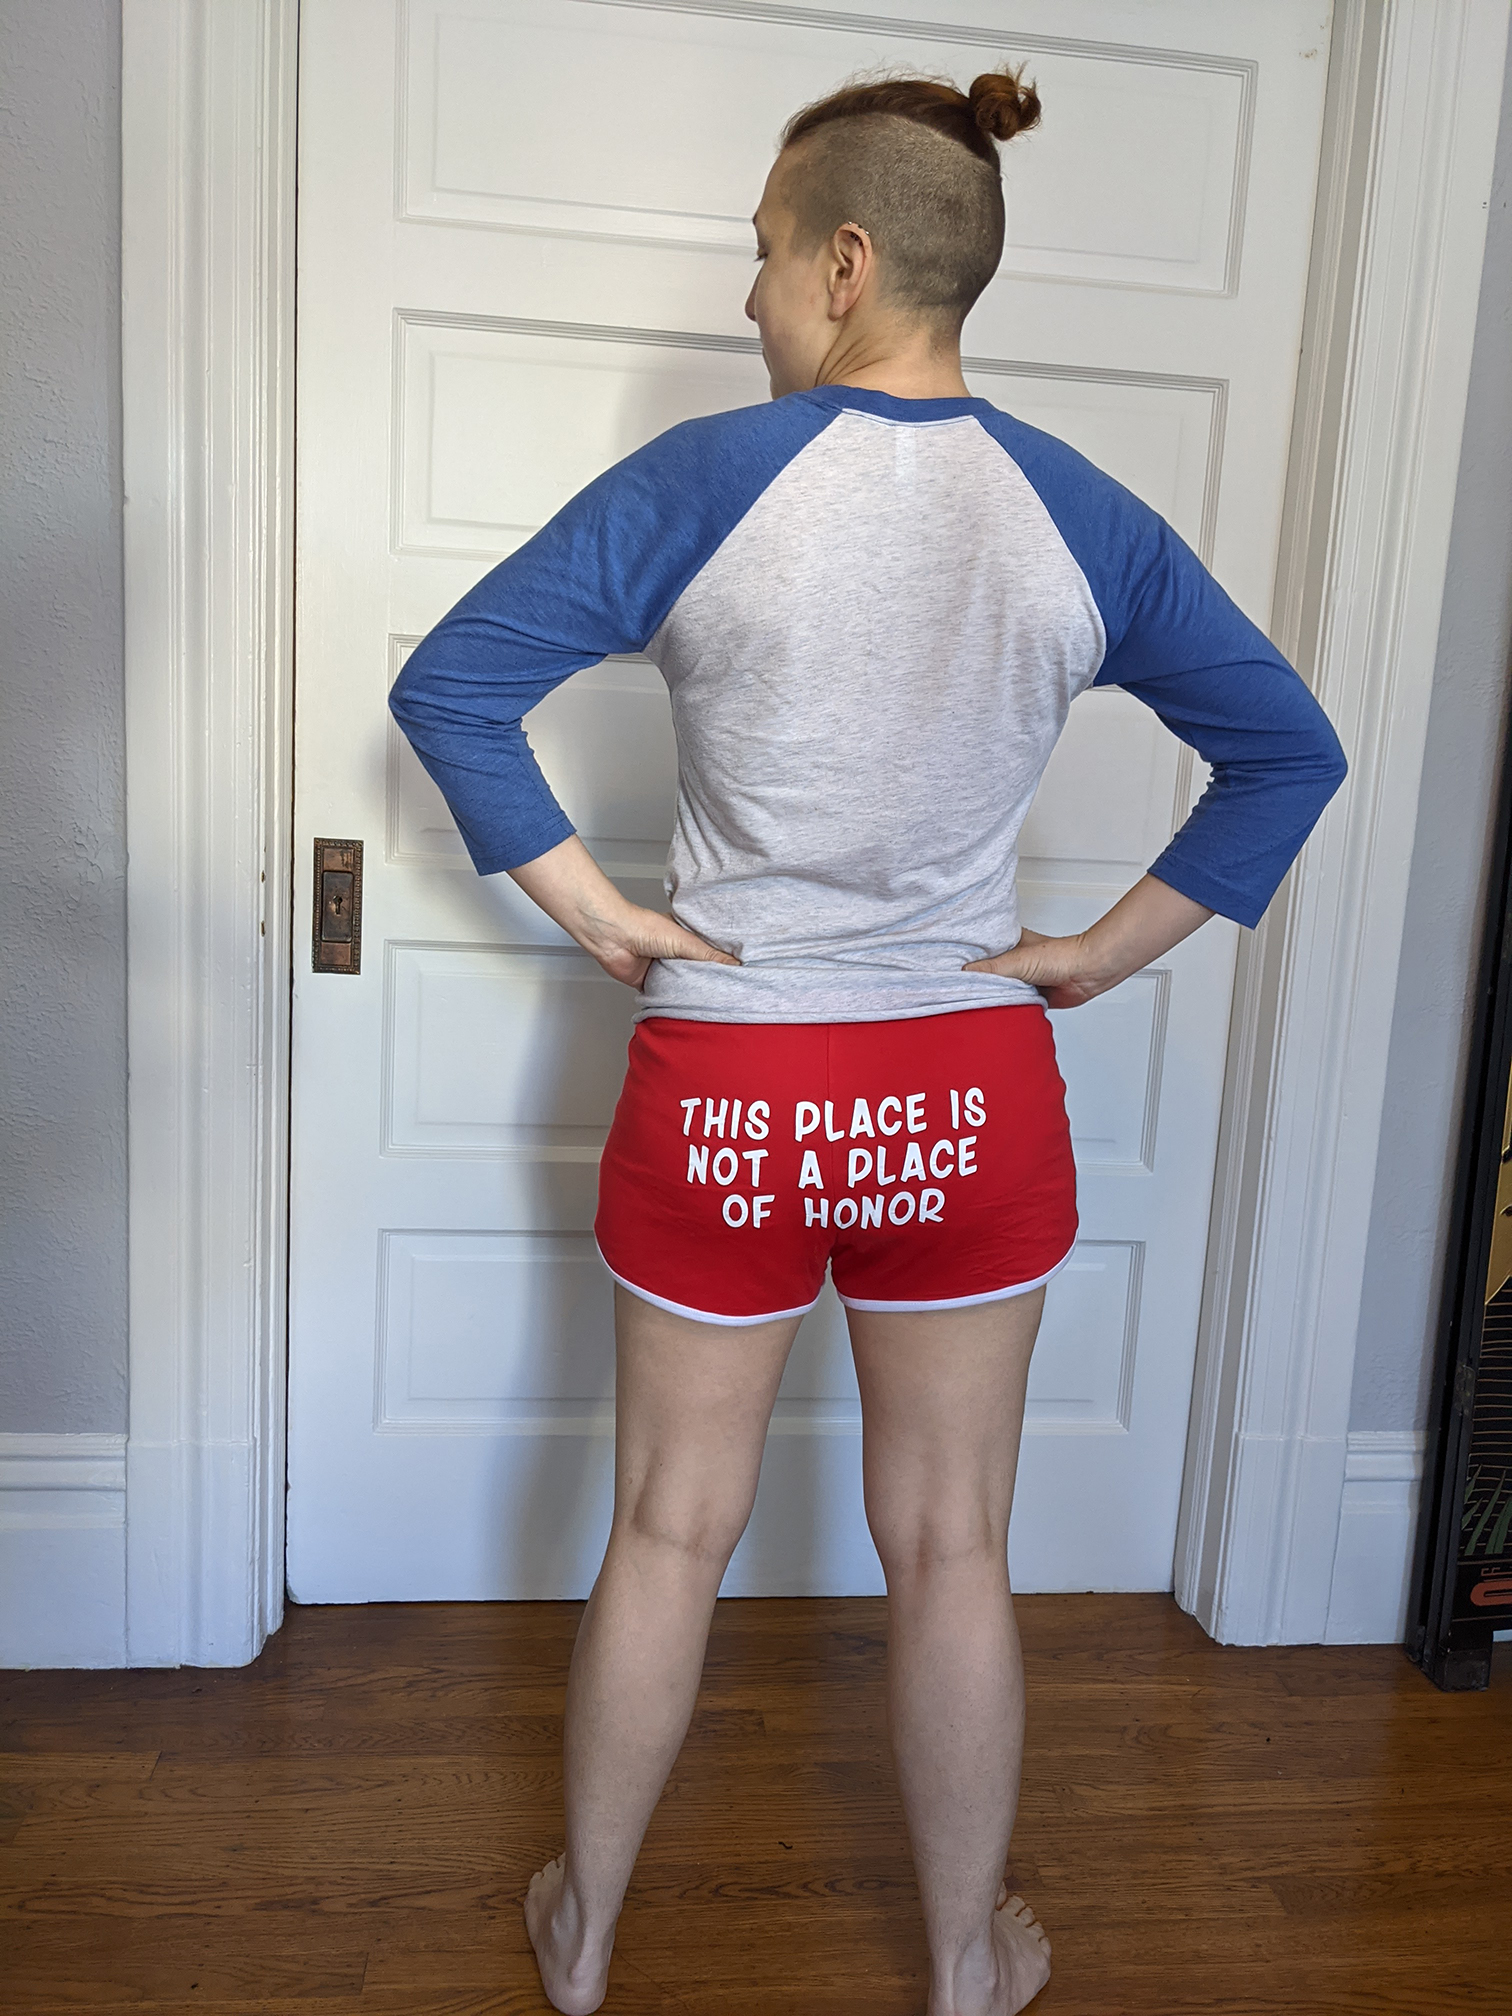 david hayat add photo wife in booty shorts